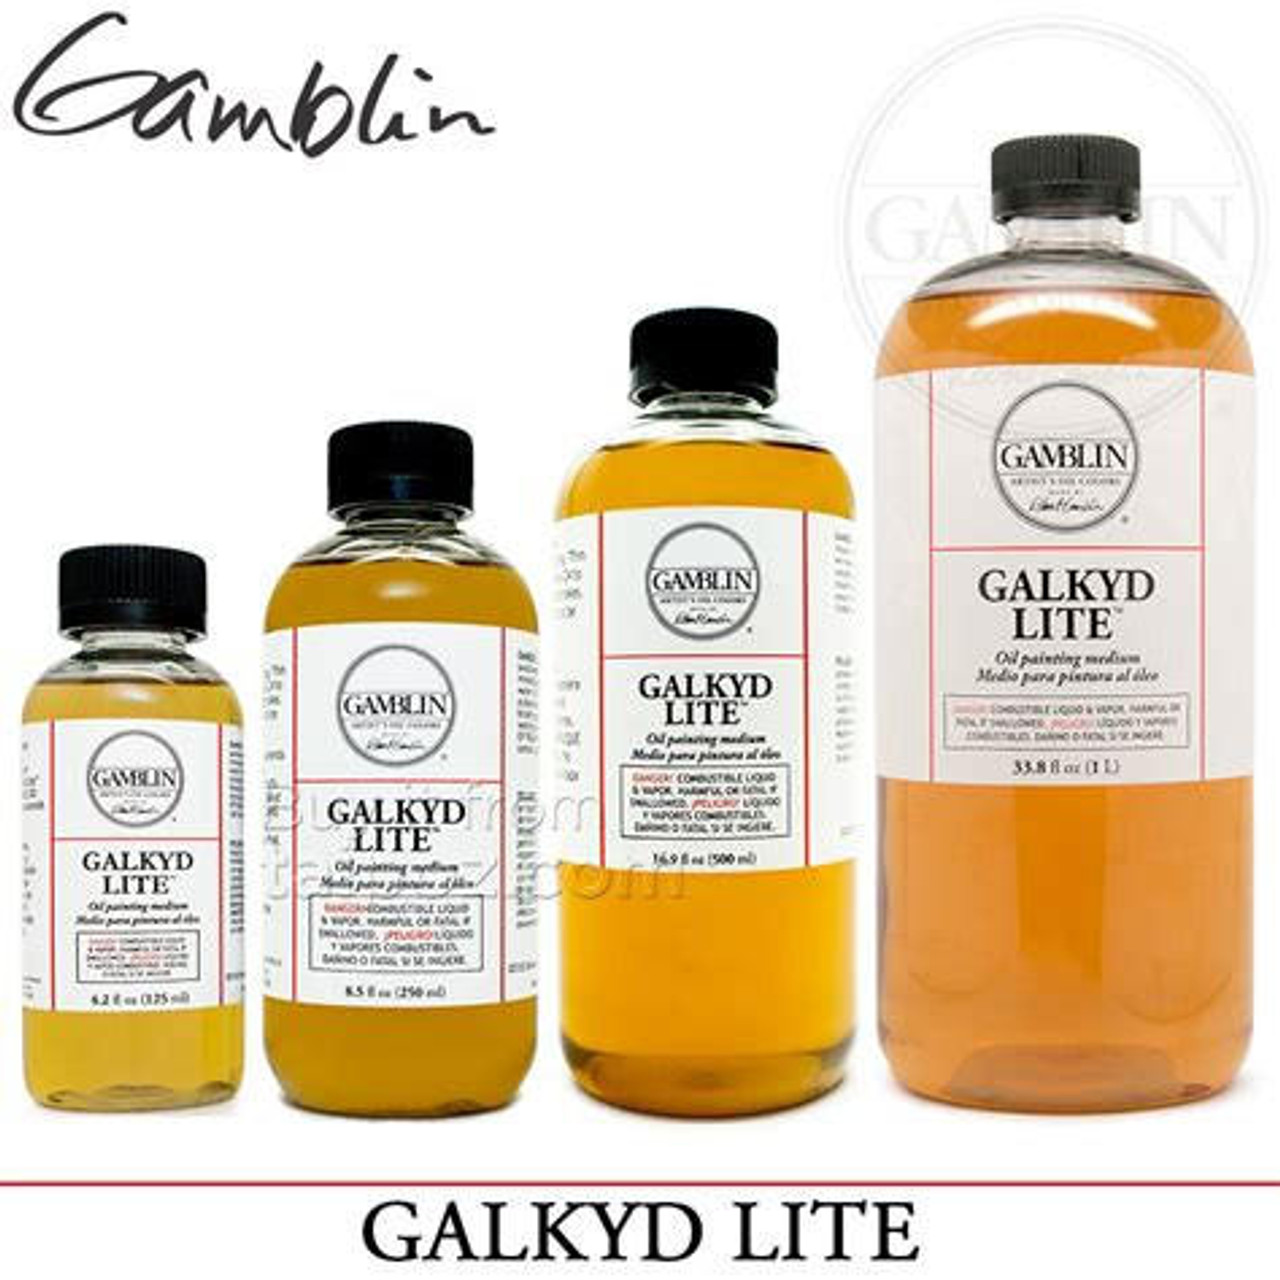 GAMBLIN - GALKYD - OIL PAINTING MEDIUM - FOR OIL PAINT - 8.5 OZ - NEW